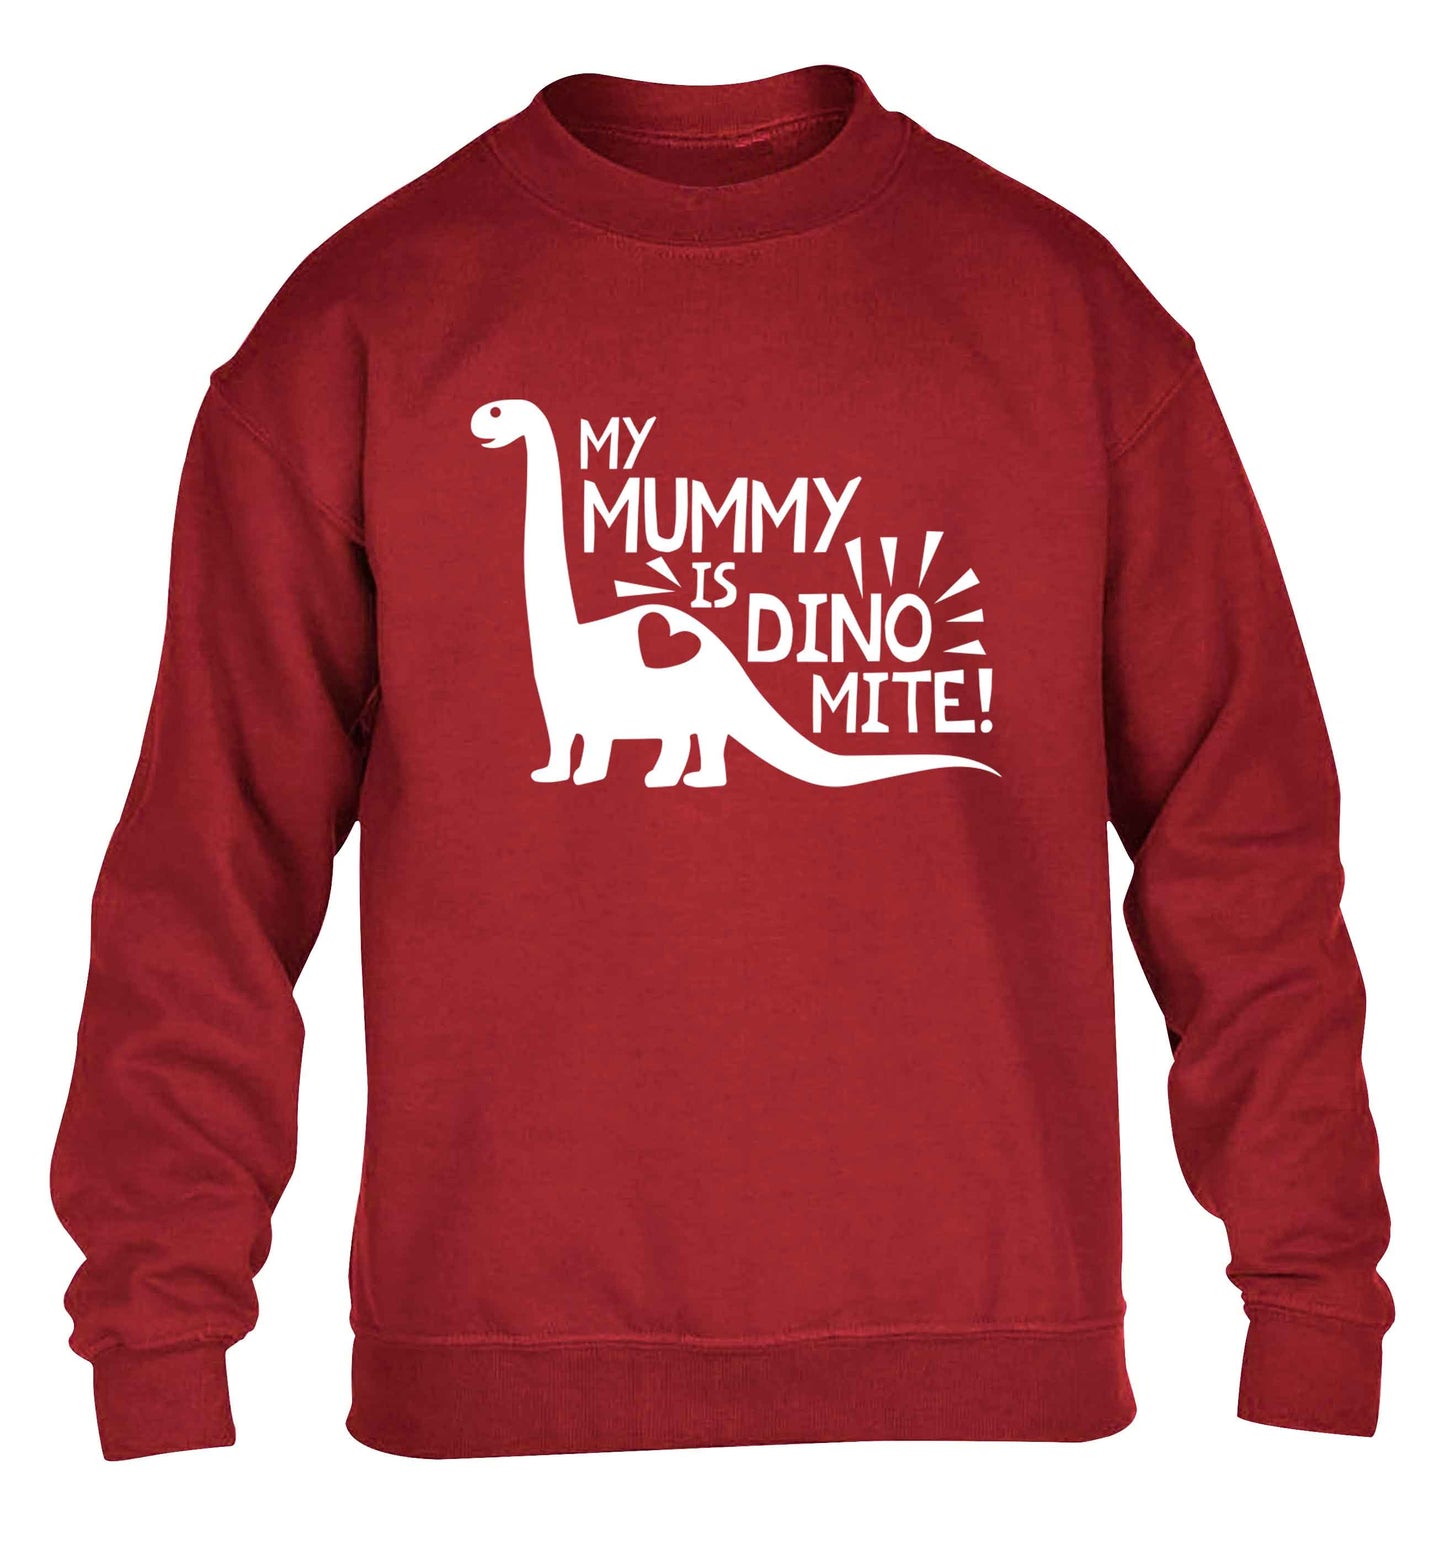 My mummy is dinomite children's grey sweater 12-13 Years